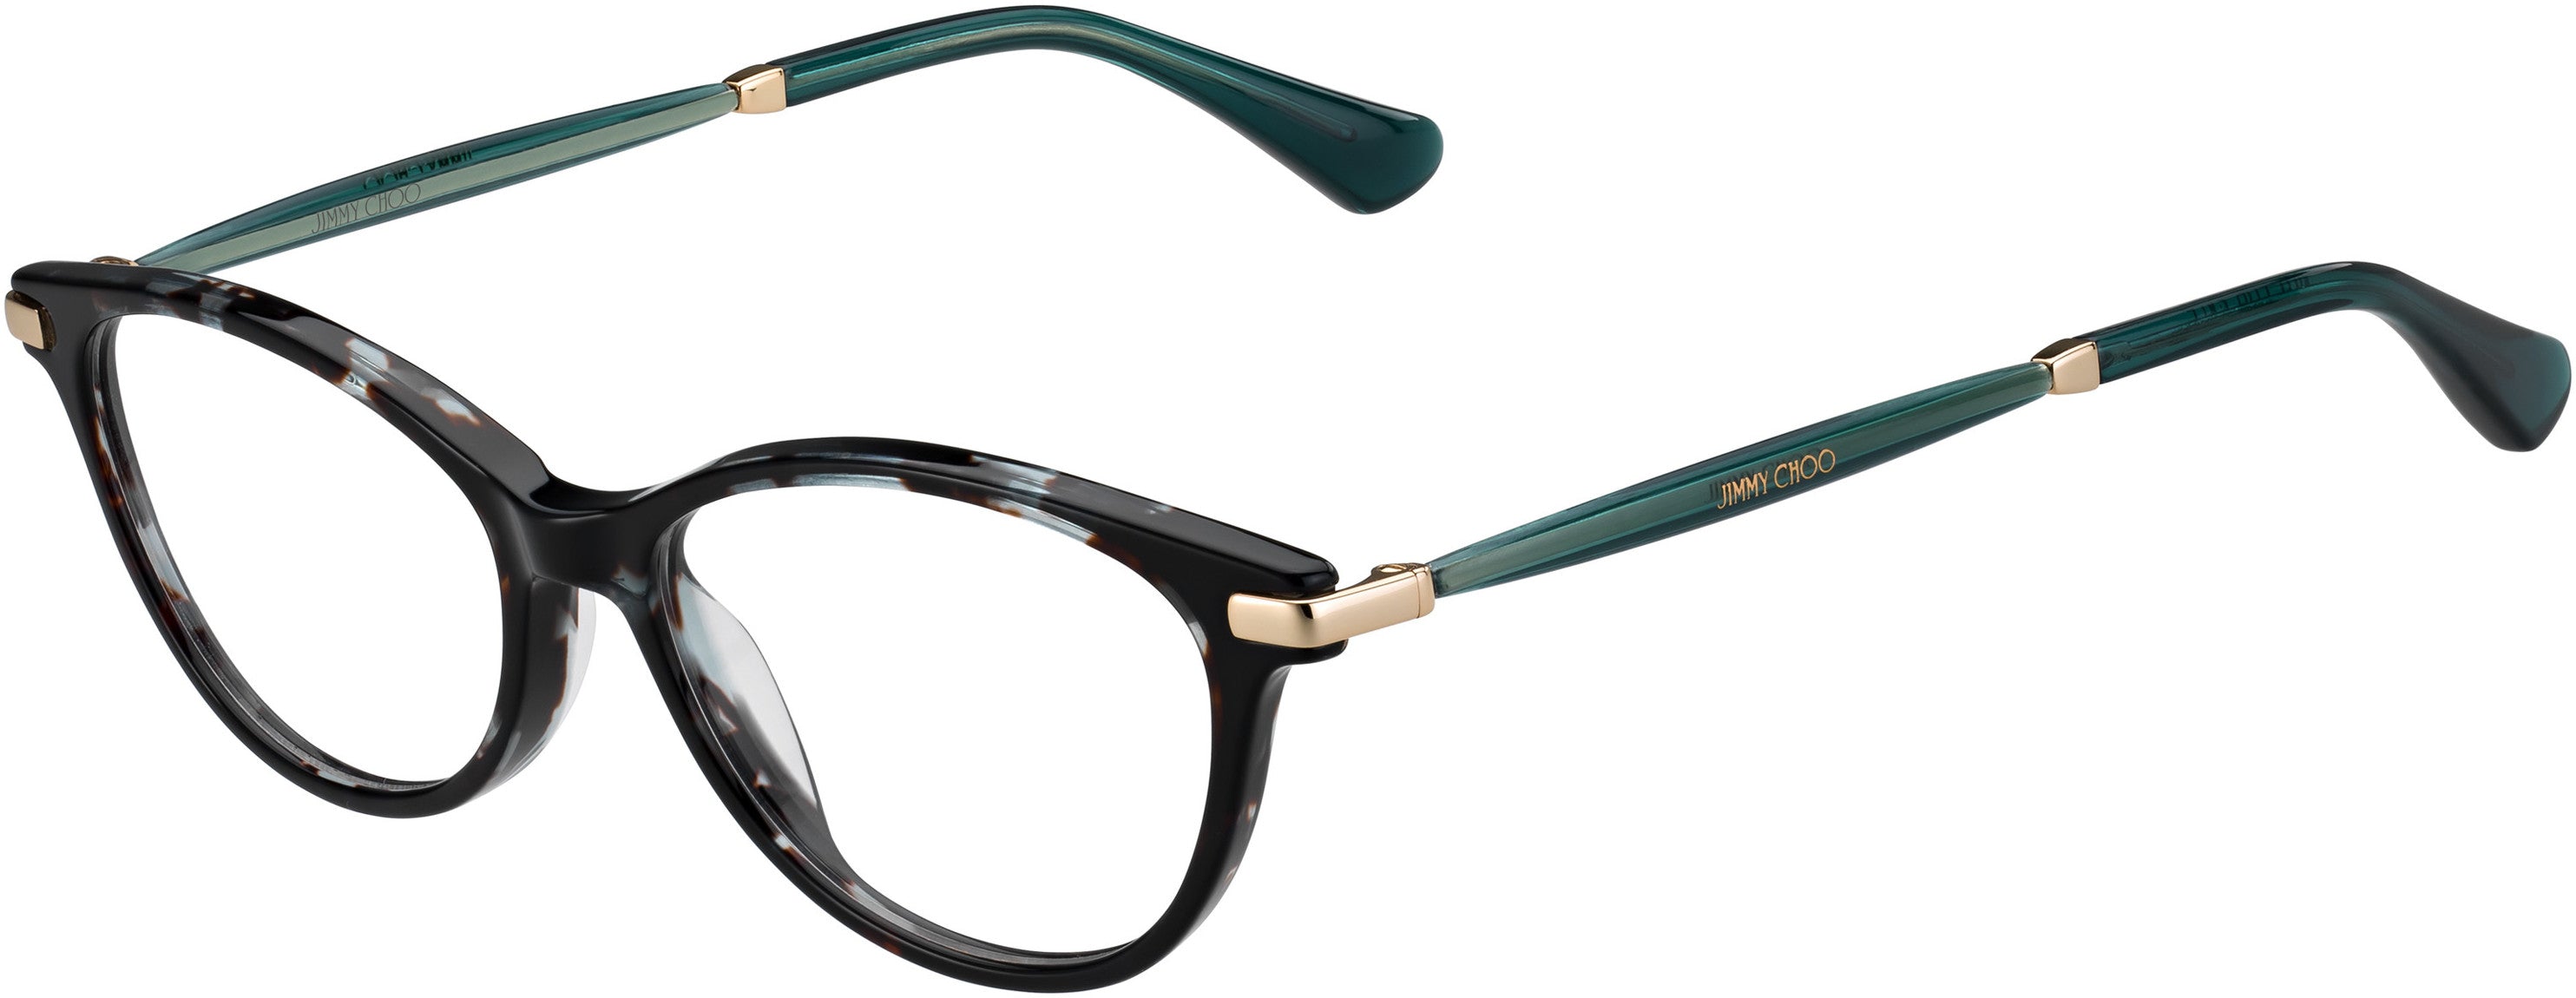  Jimmy Choo 153 Rectangular Eyeglasses 01M5-01M5  Havana Green Gdcp (00 Demo Lens)